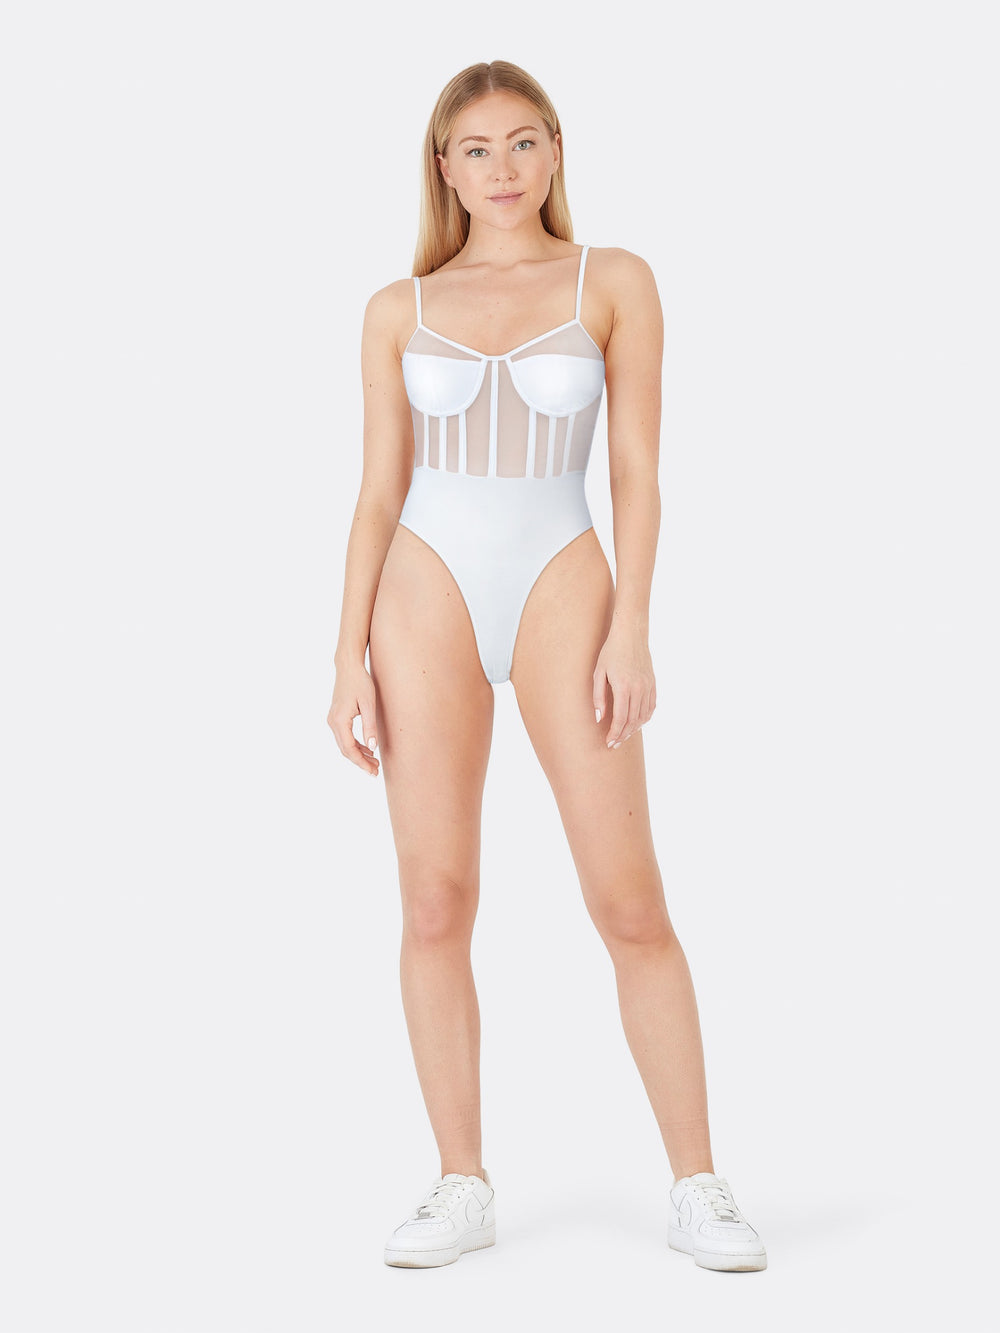 Transparent Bodysuit with Sweetheart Neckline Adjustable Thin Straps White Front | Jolovies